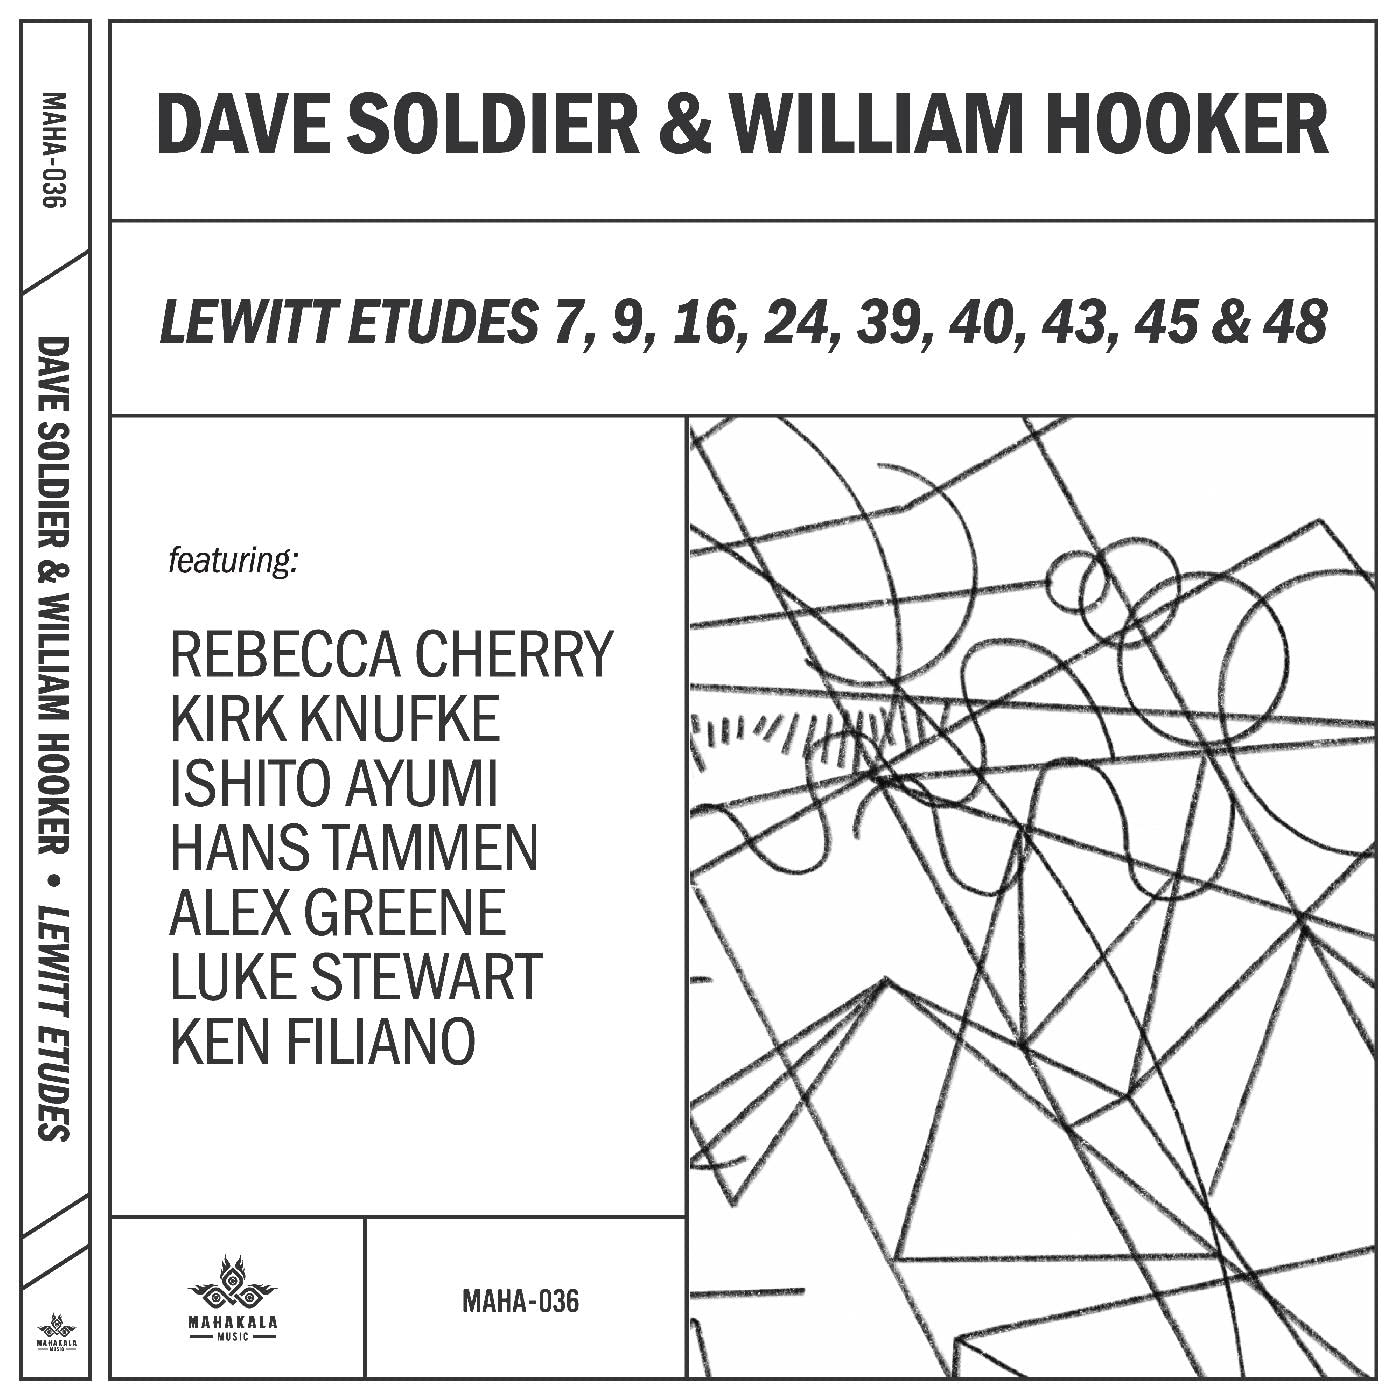 DAVID SOLDIER - Dave Soldier &amp; William Hooker : Lewitt Etudes cover 